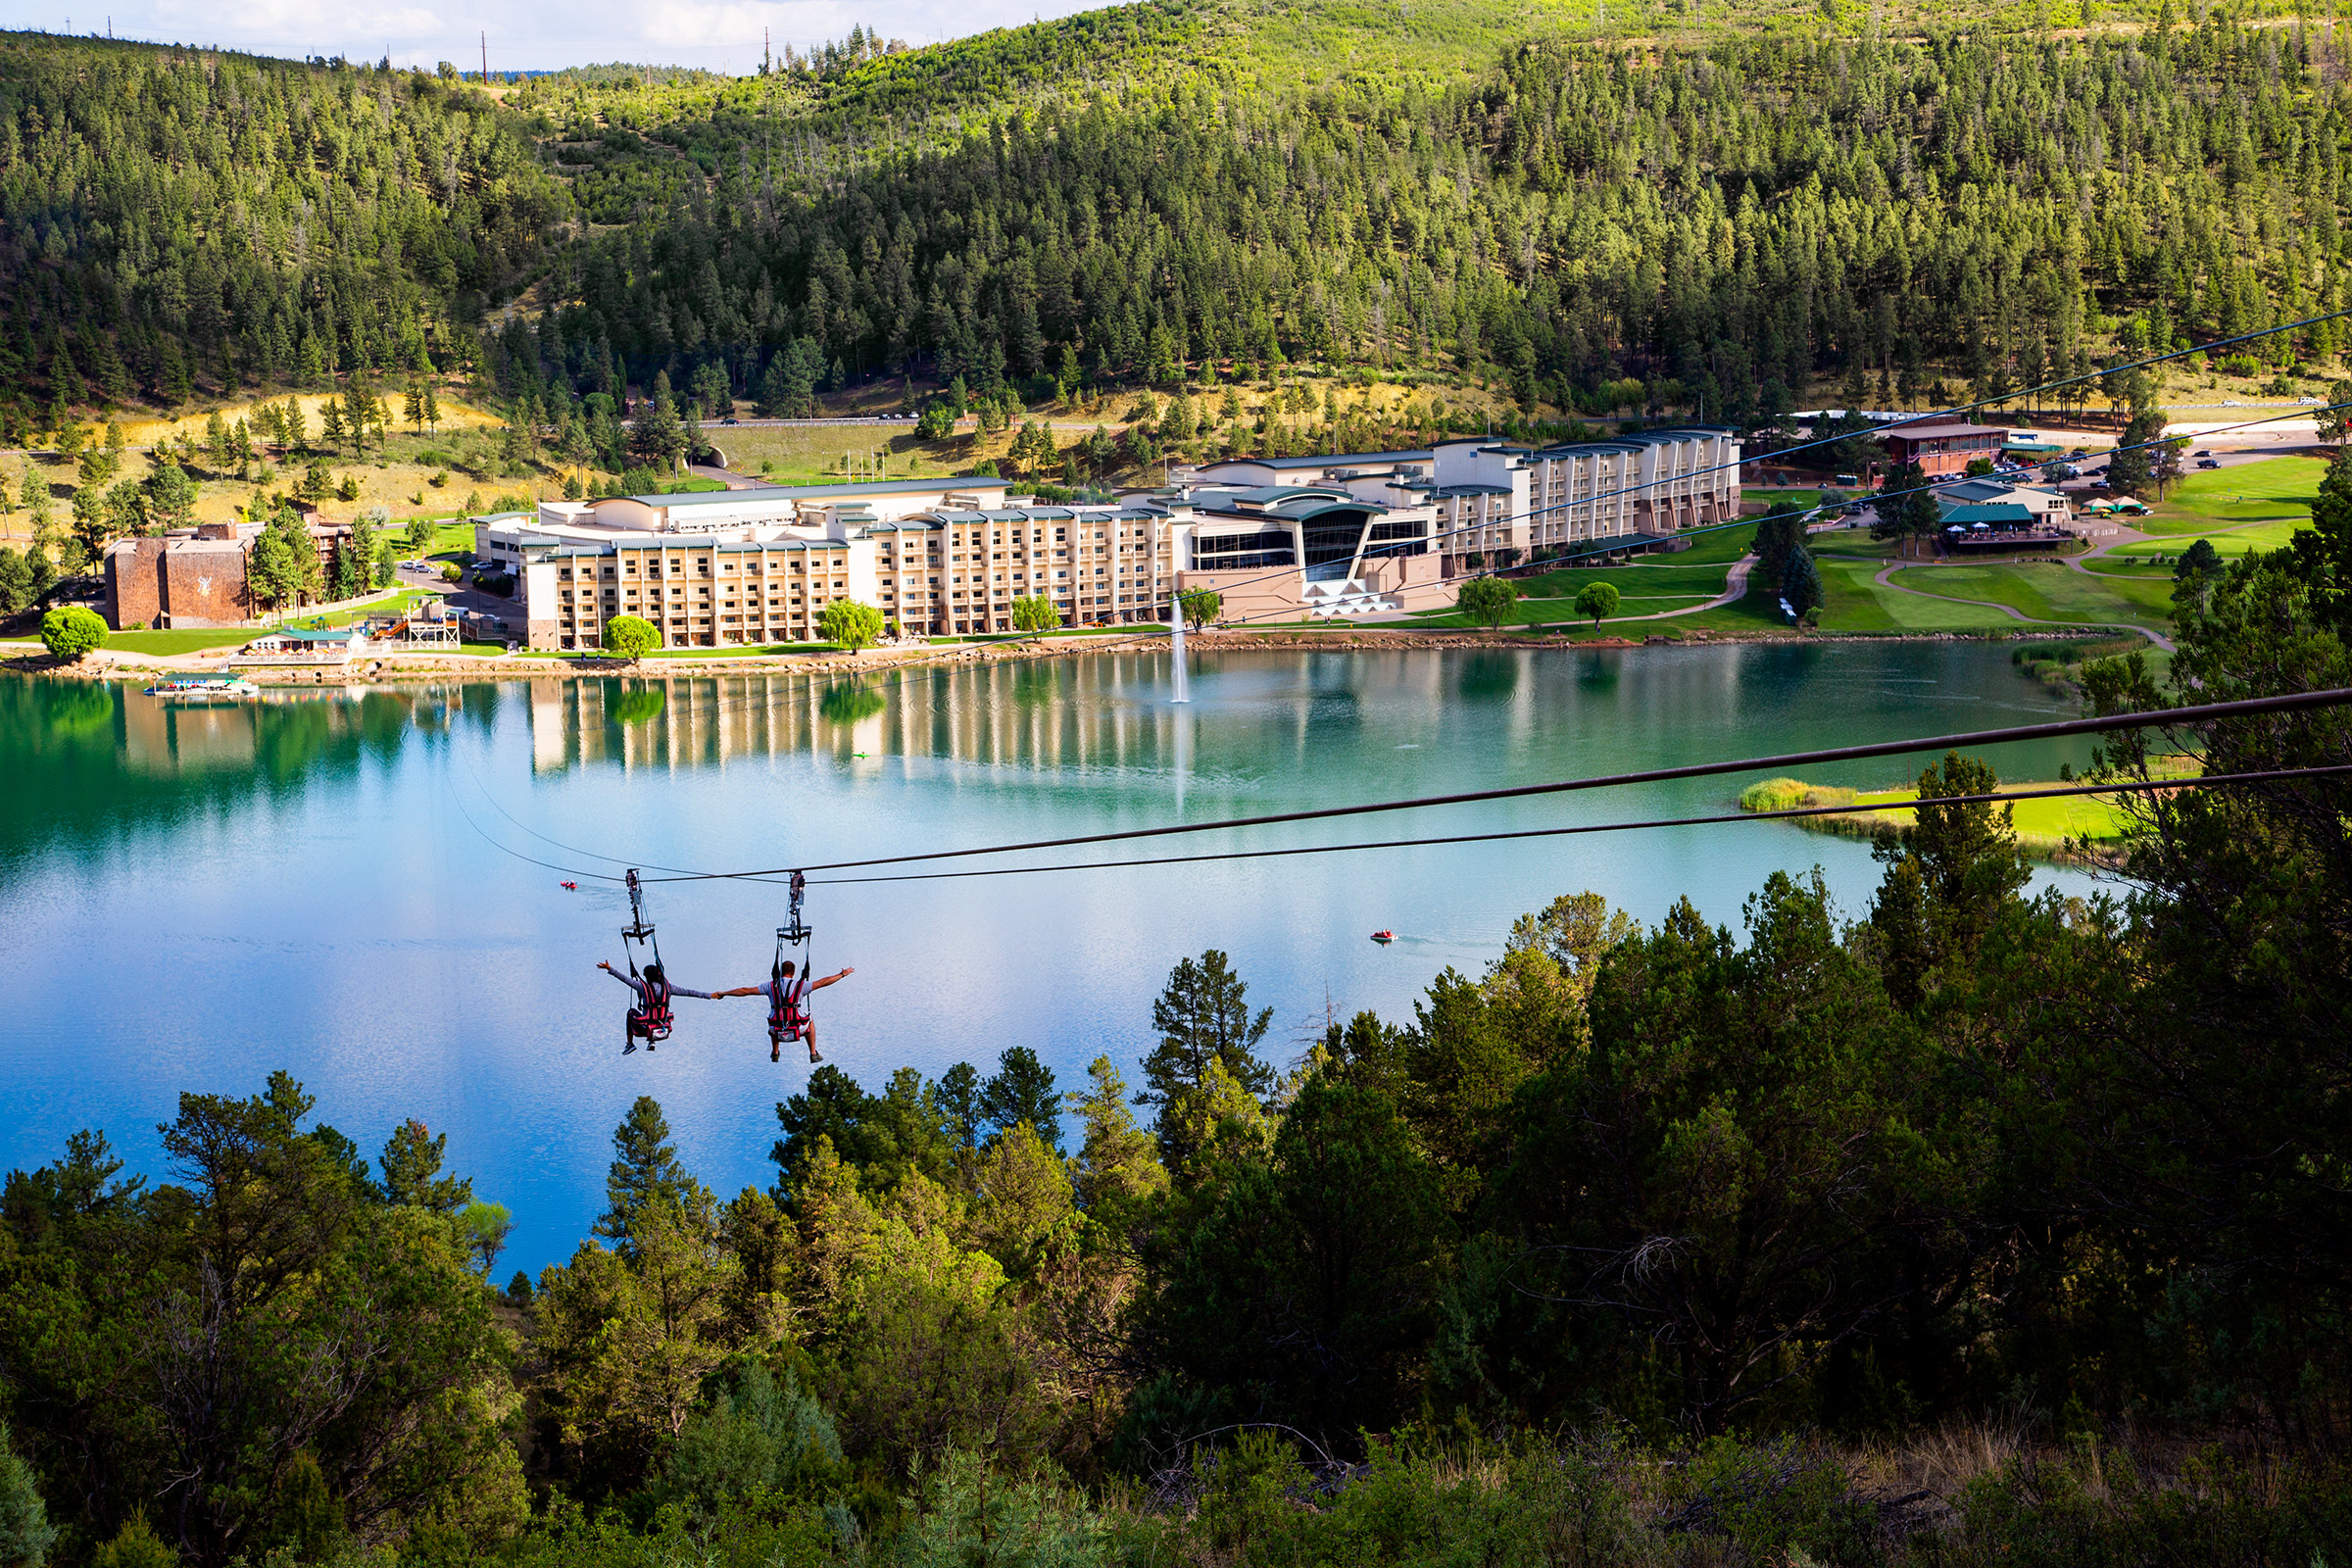 New Mexico zipline at Inn of the Mountain Gods Resort & Casino.